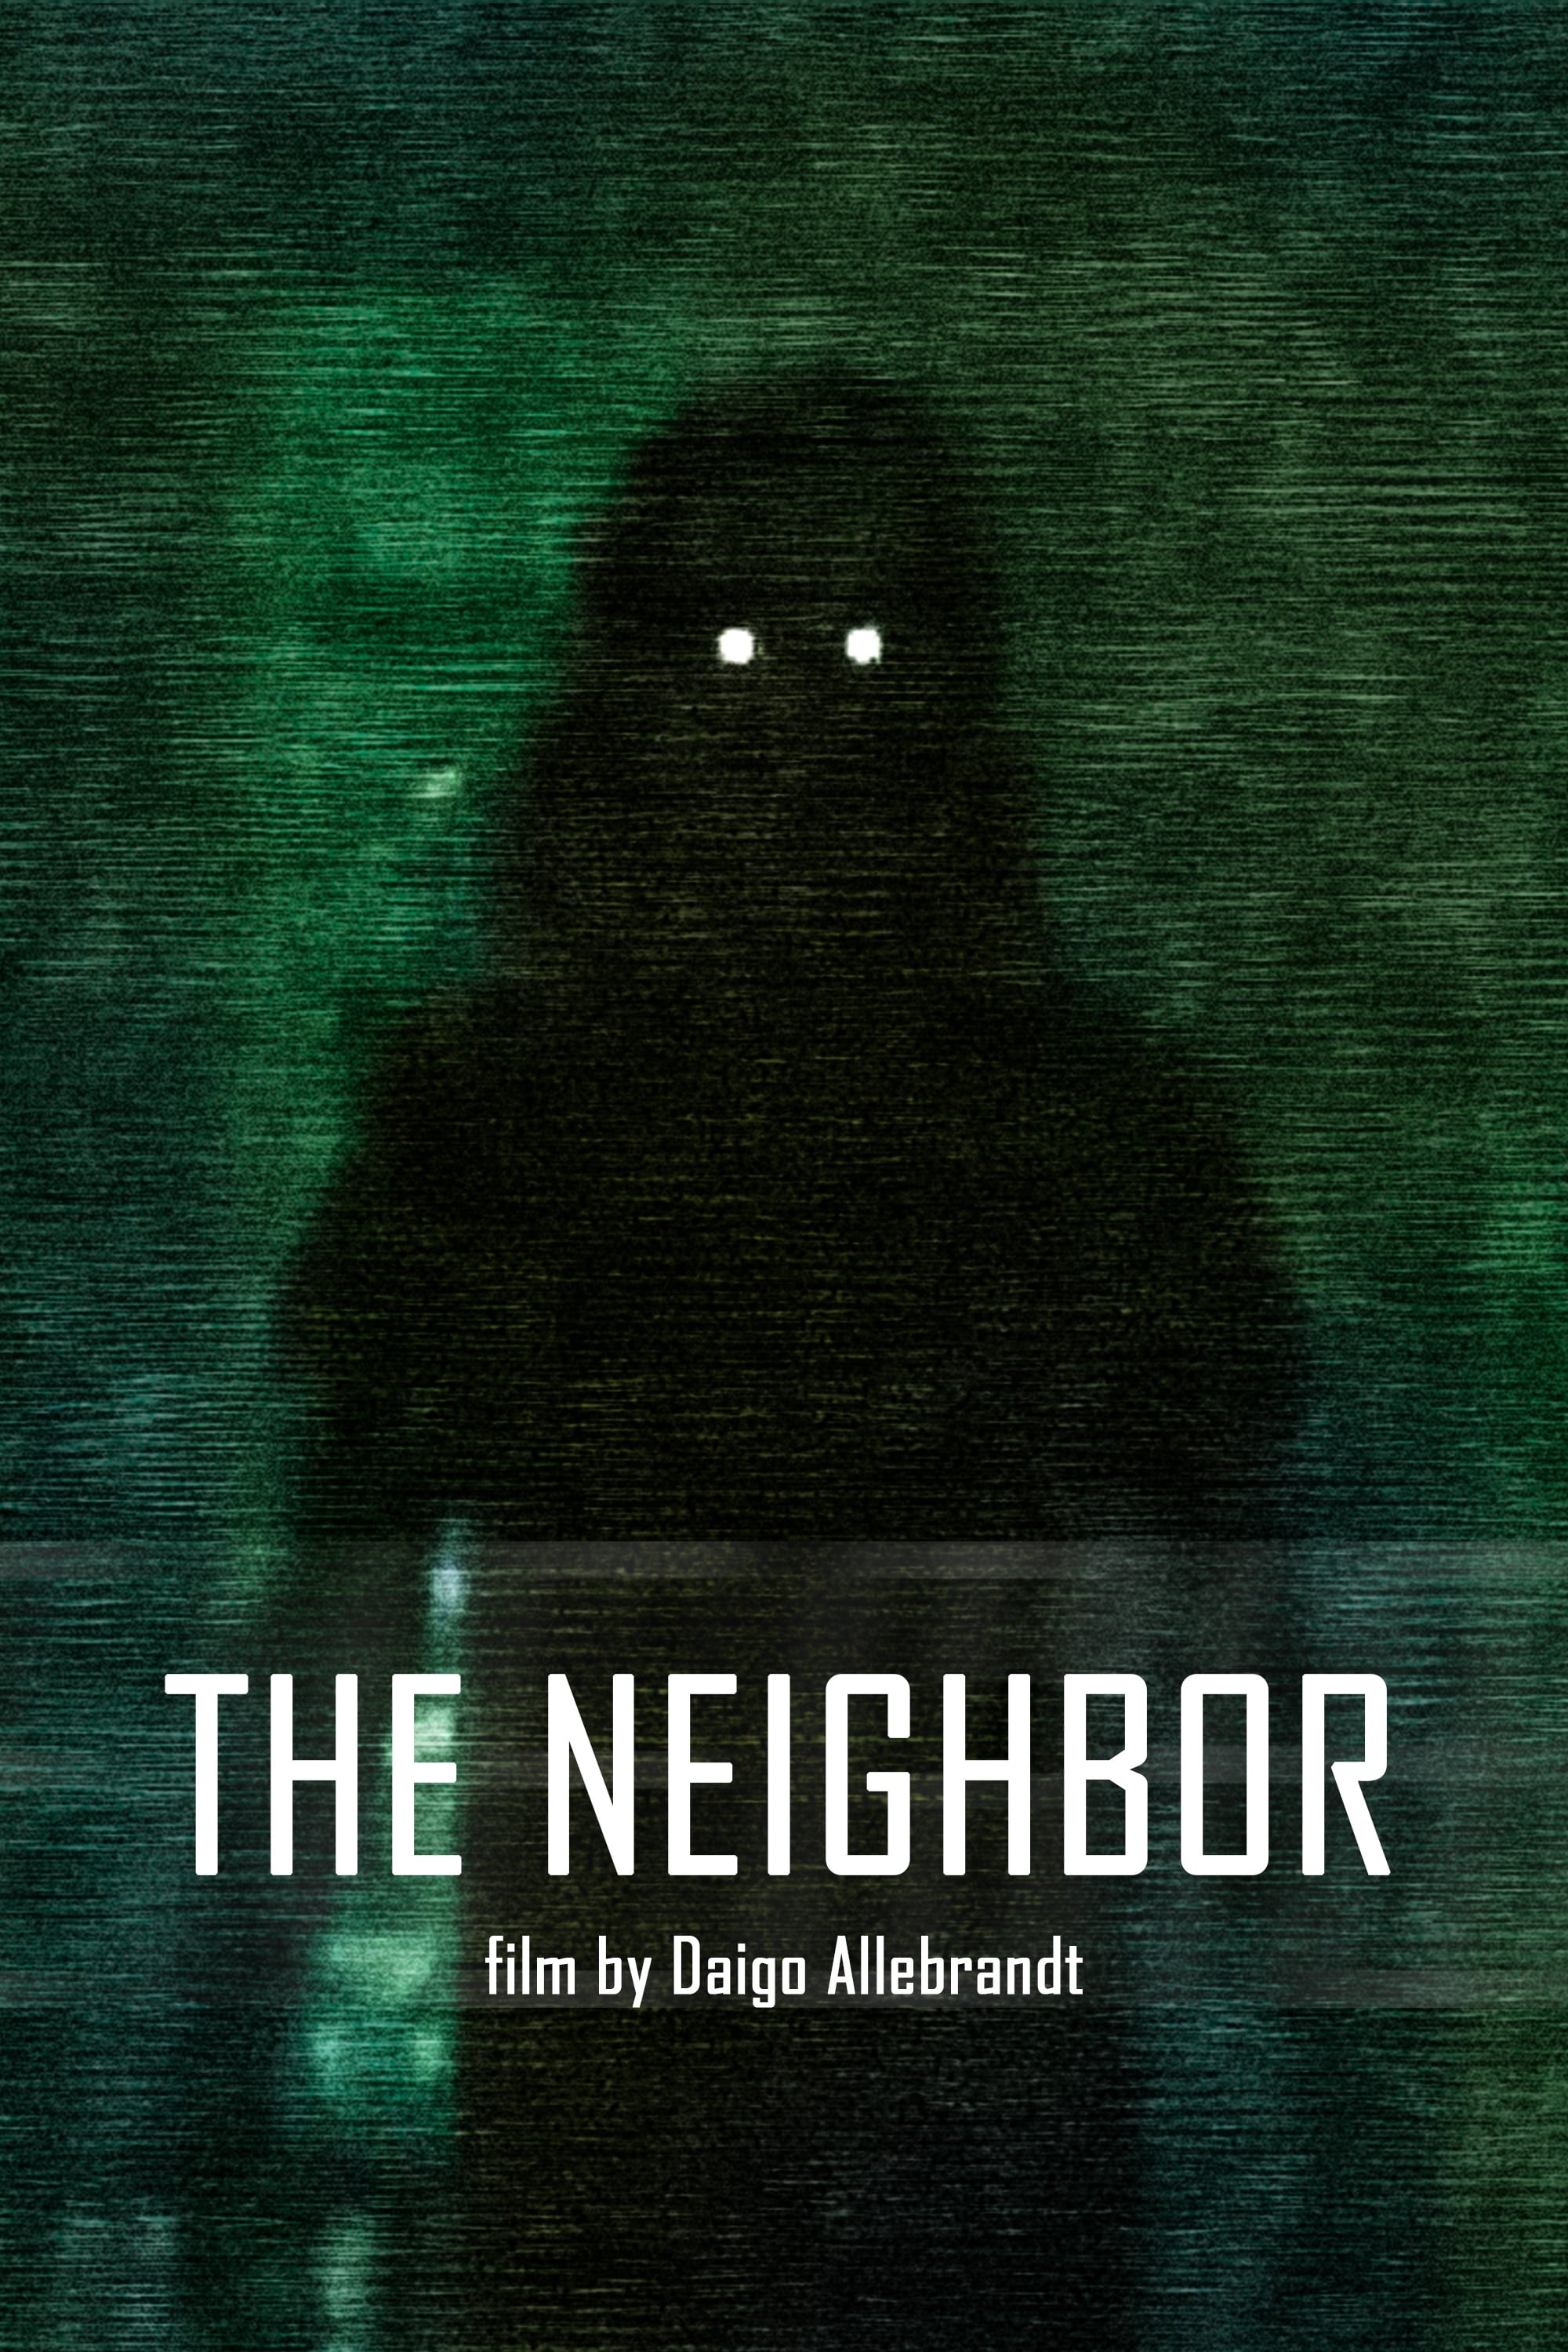 The neighbour